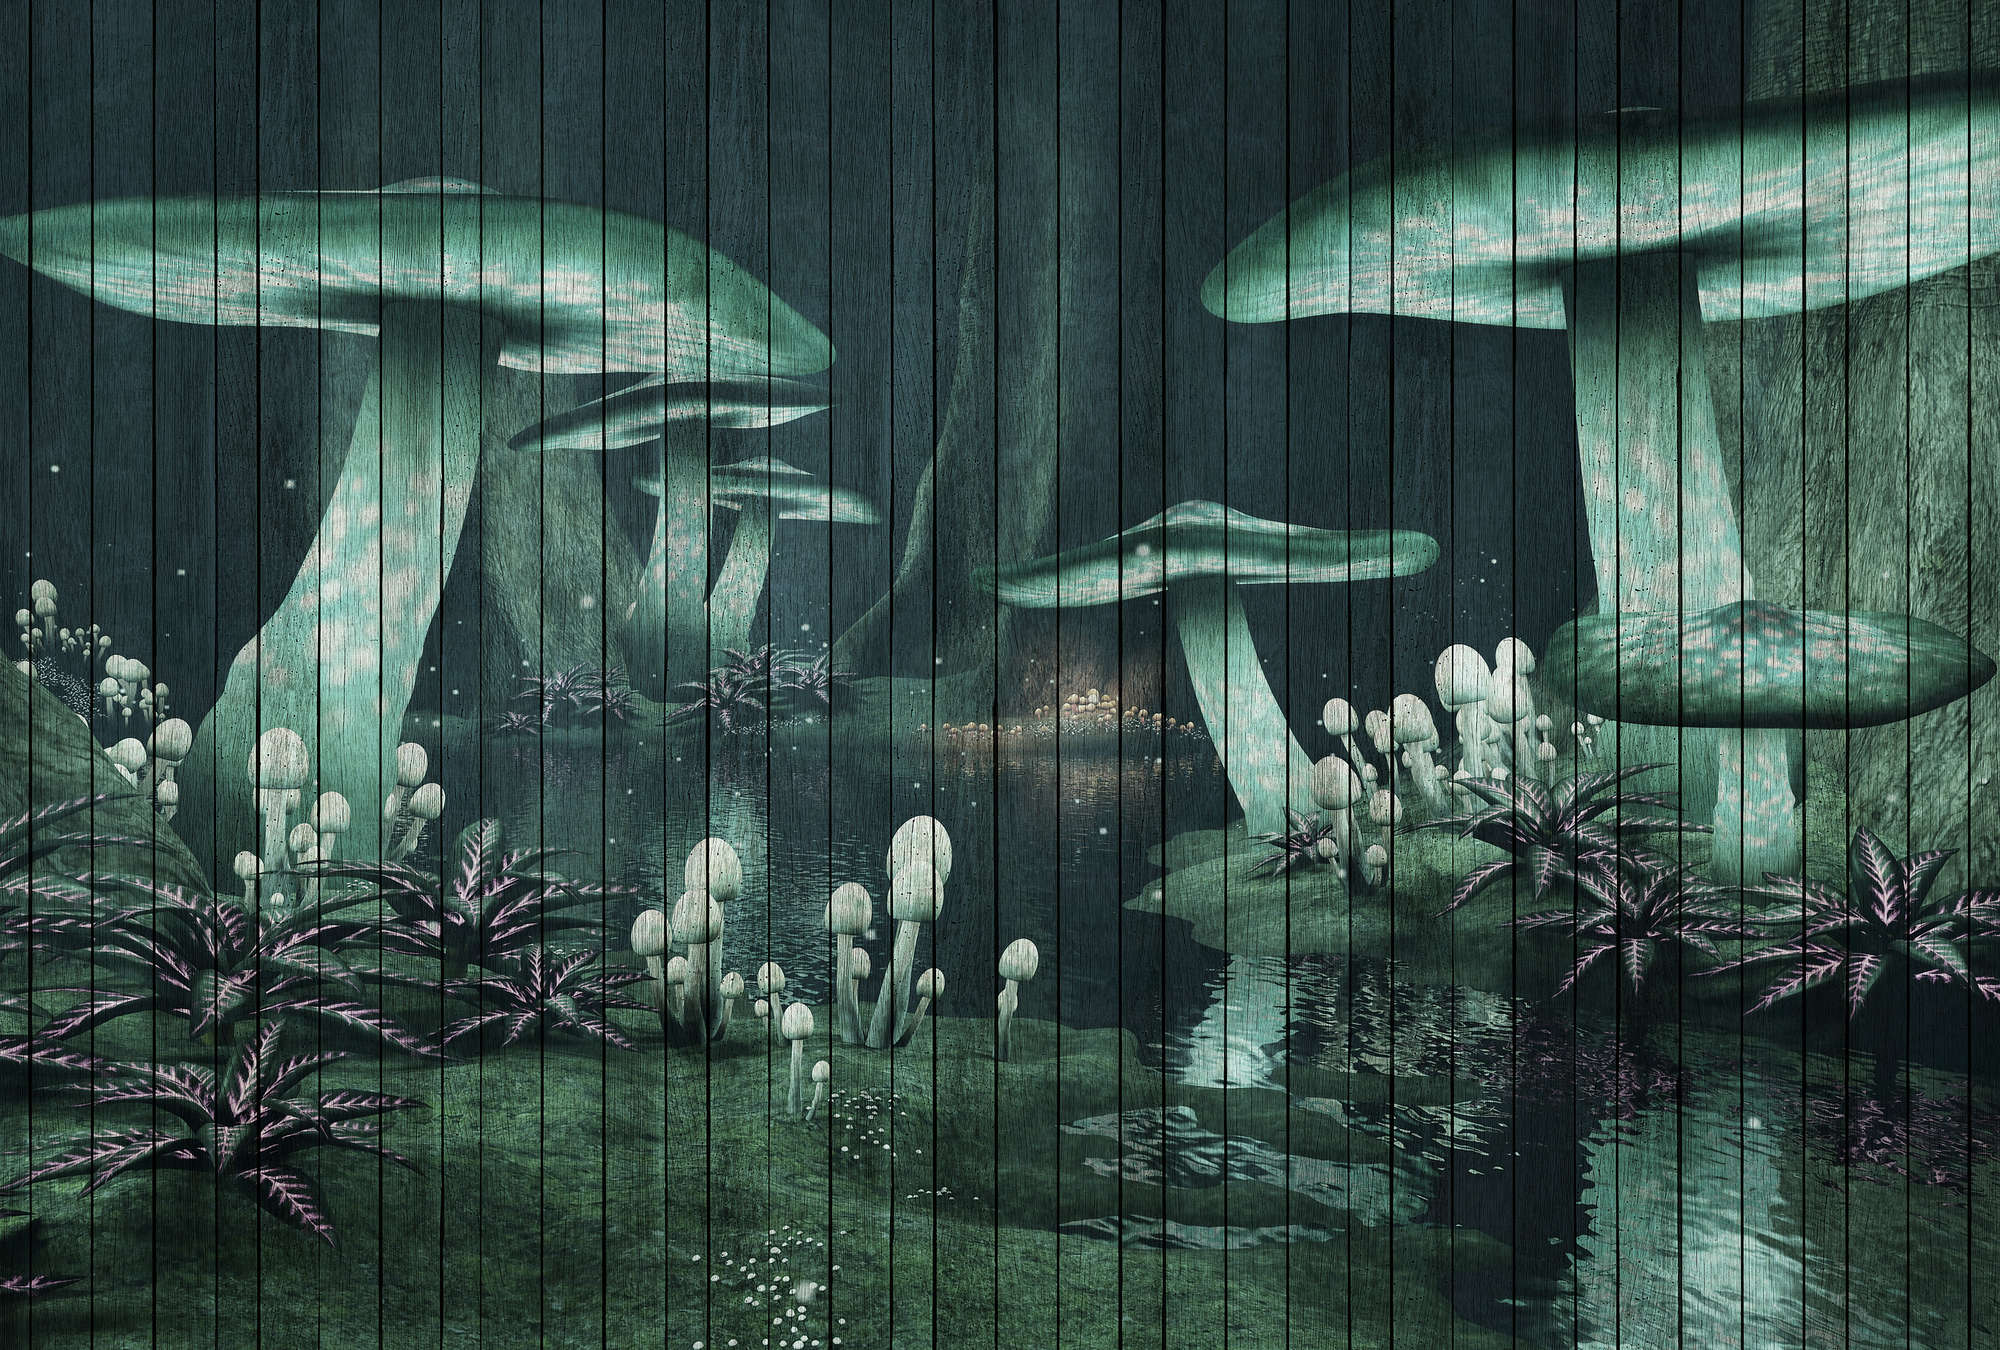             Fantasy 1 - Fototapete Zauberwald mit Holzoptik – Grün | Struktur Vlies
        